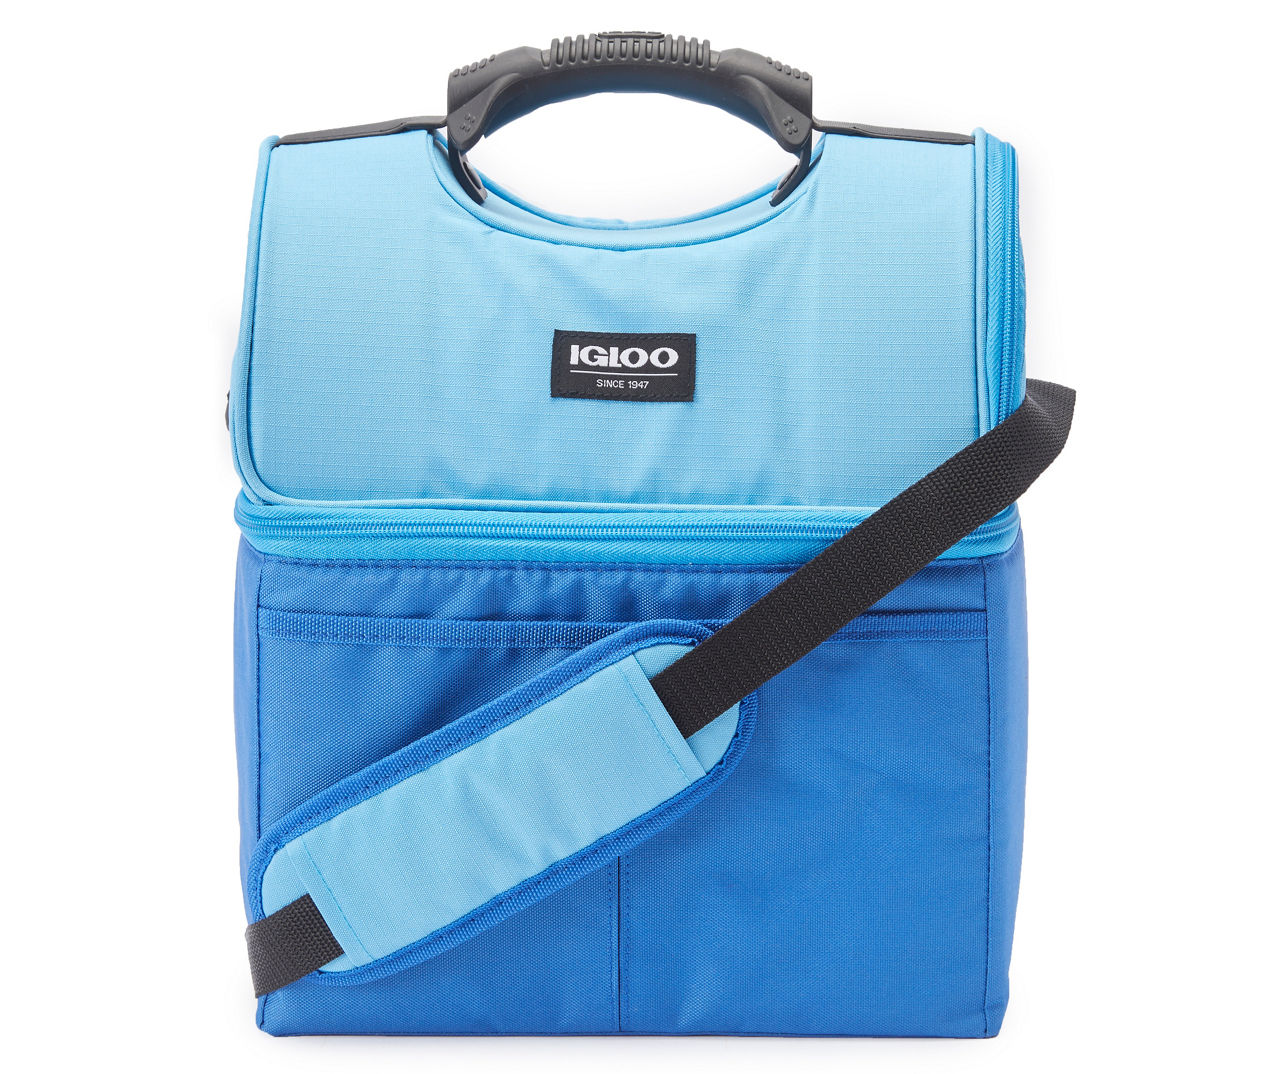 igloo cooler bag